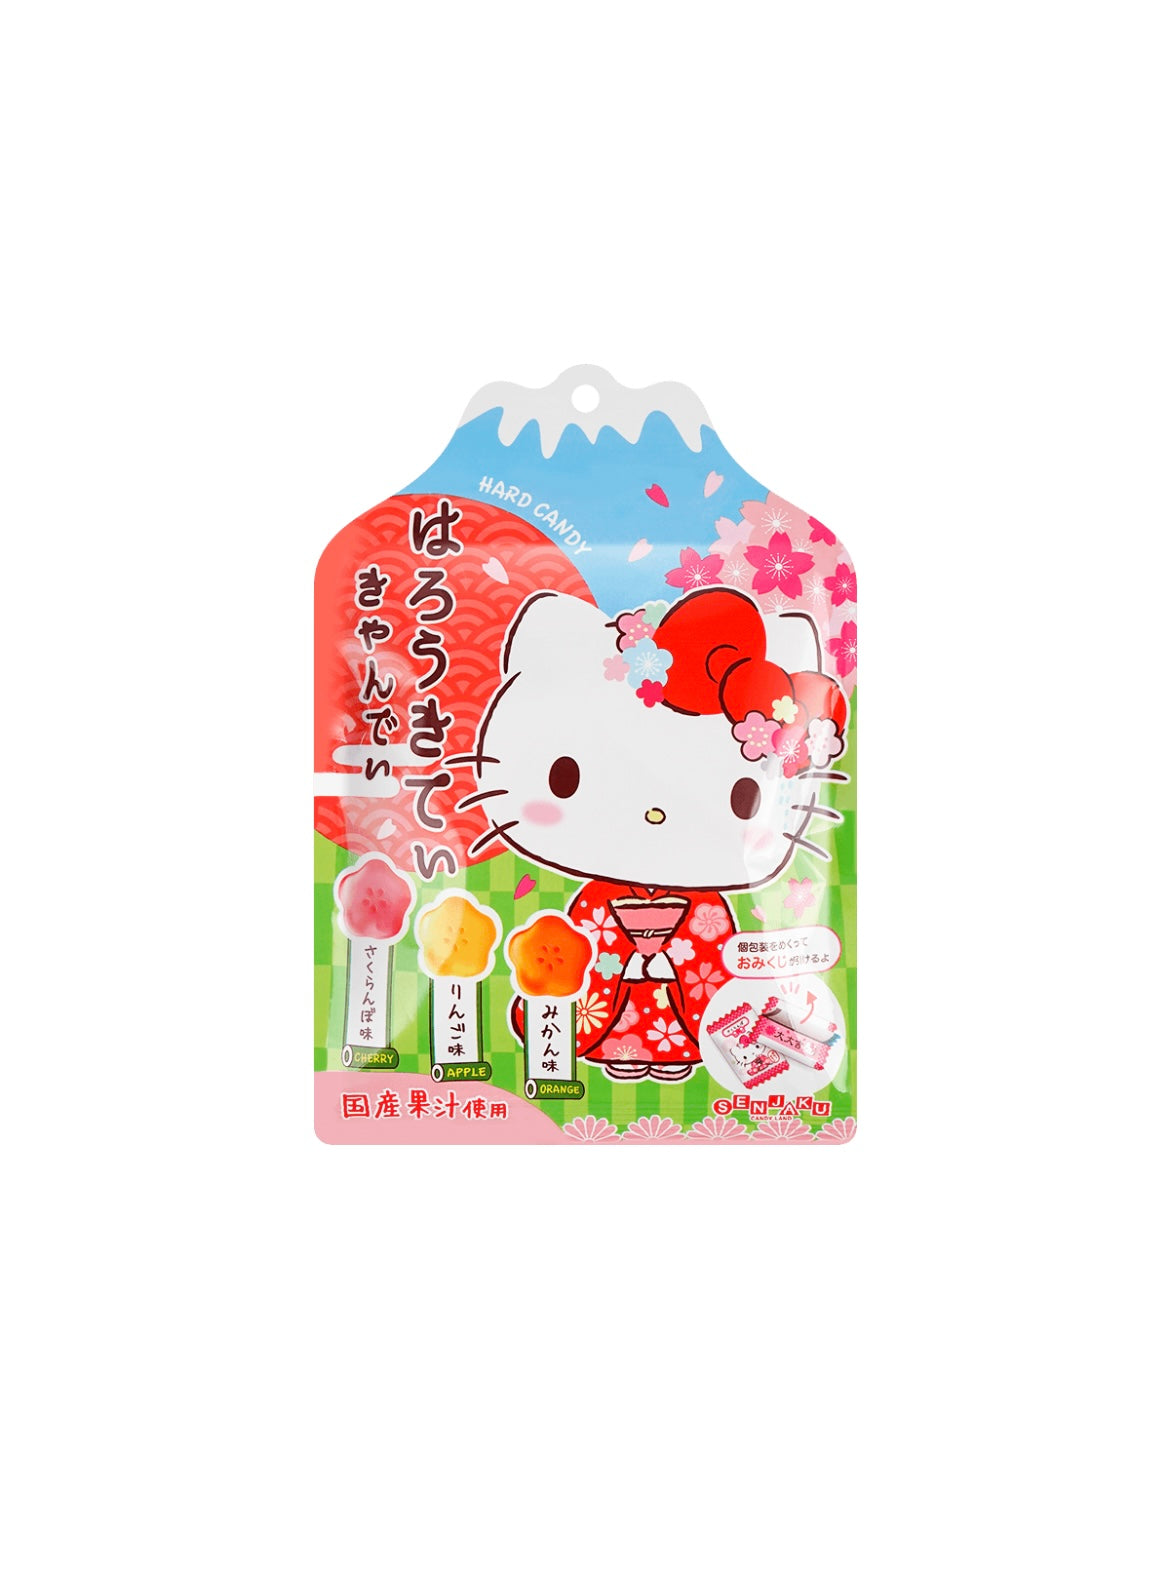 Hello Kitty Cherry Blossom Candy (Japan)